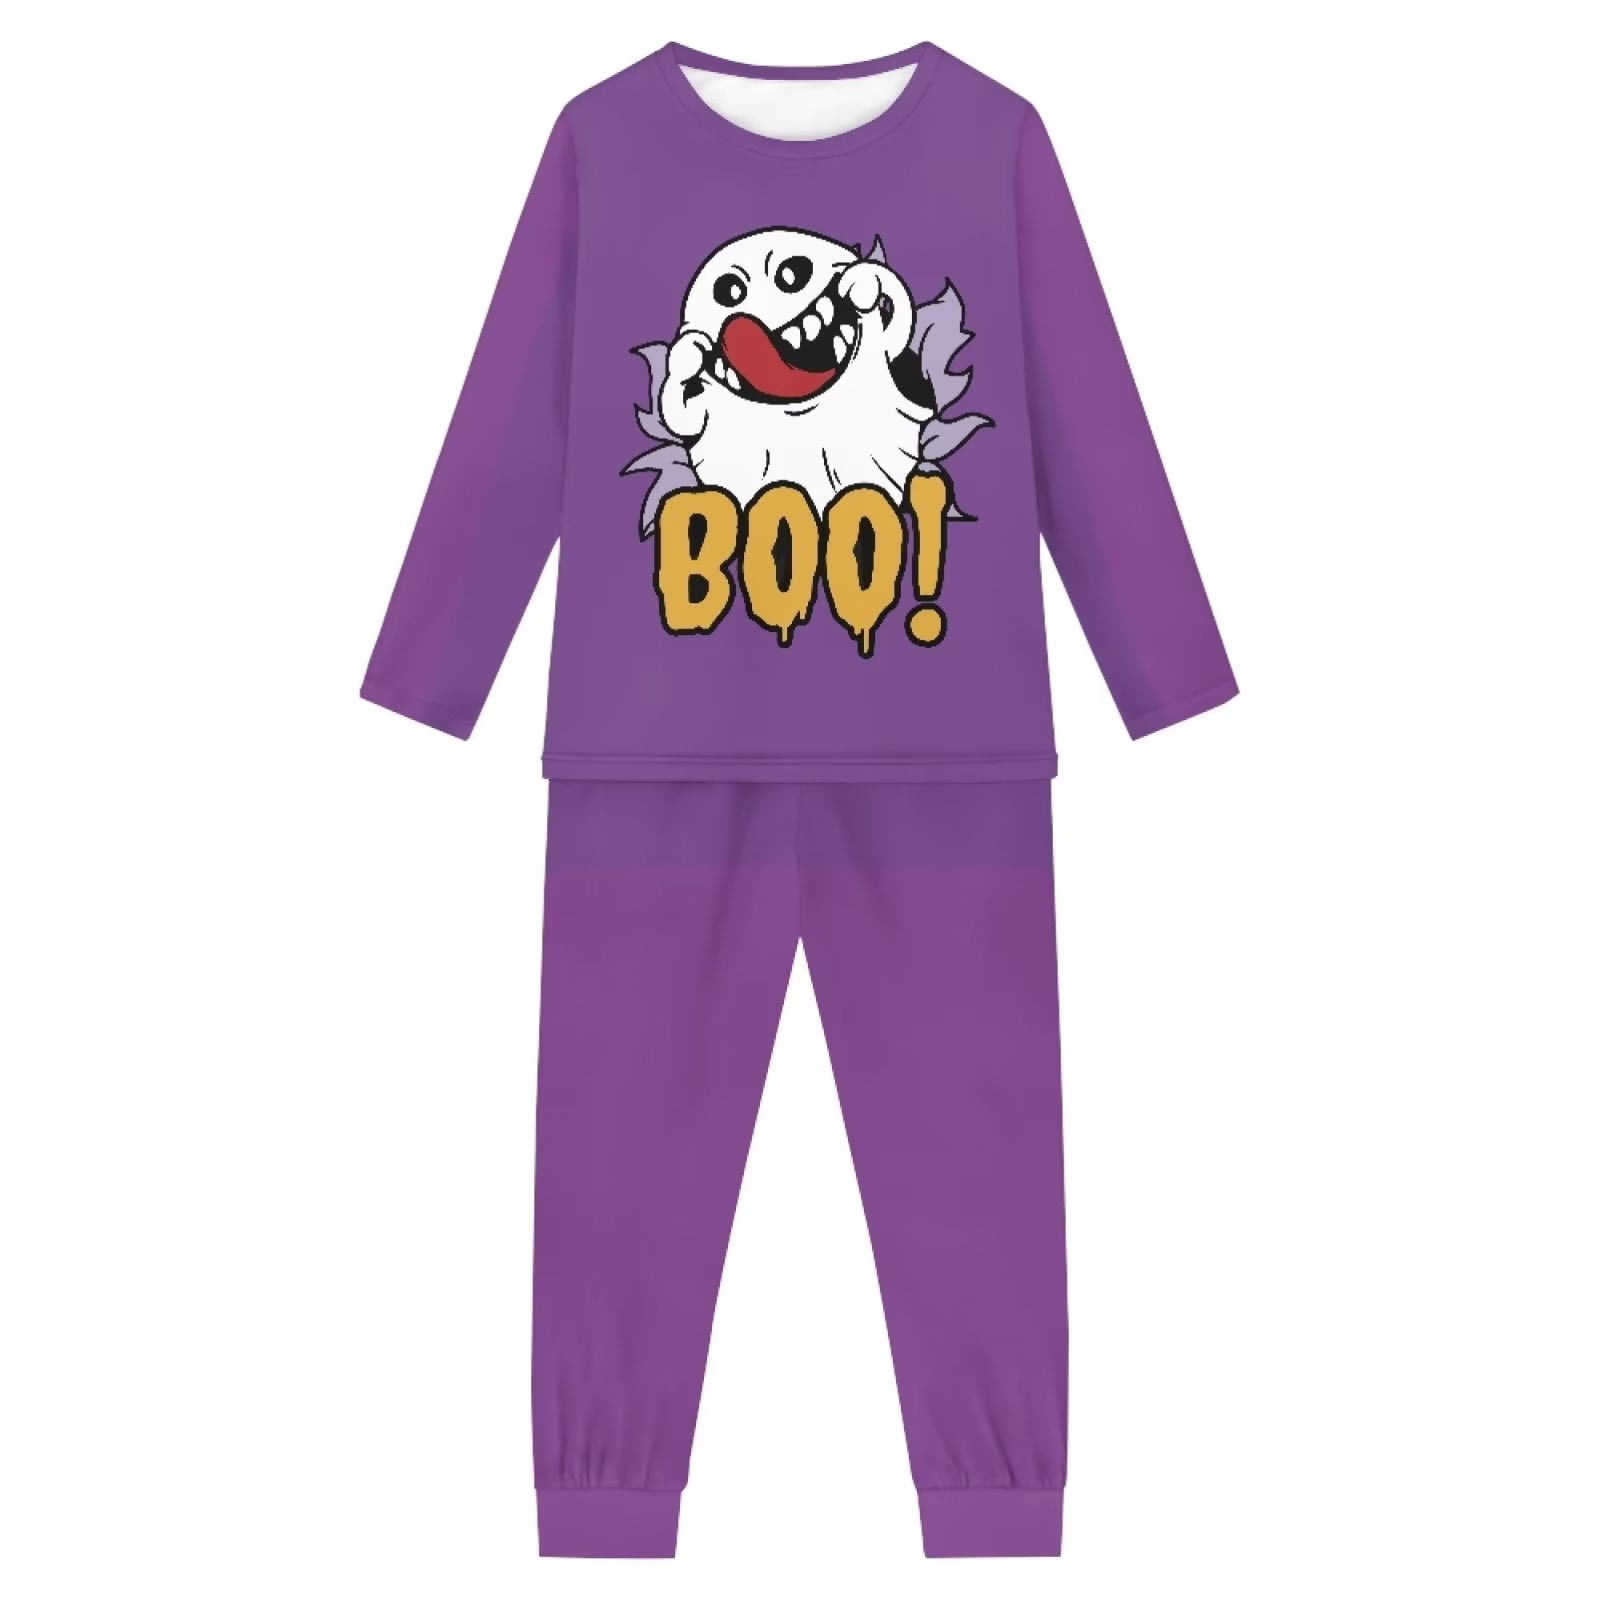 Pzuqiu Boo Ghost Sleepwear for Kids Novelty Pajama Cozy Up Lounge